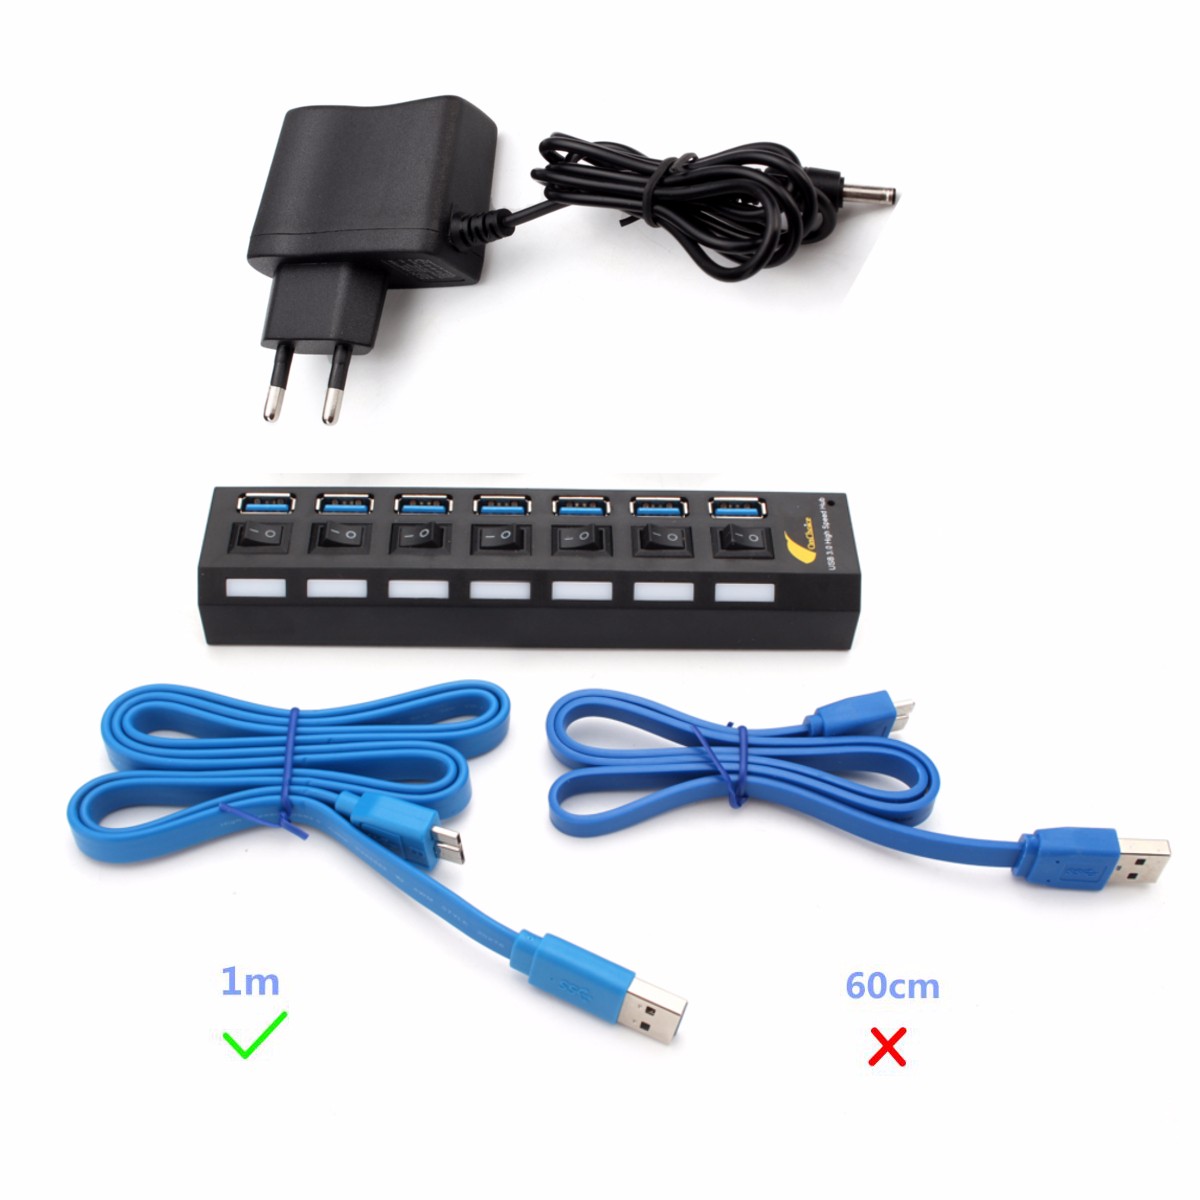 ONCHOICE 7Port USB 3.0 Hub On/Off Switch EU US UK AC Power Adapter For Laptop Desktop 16